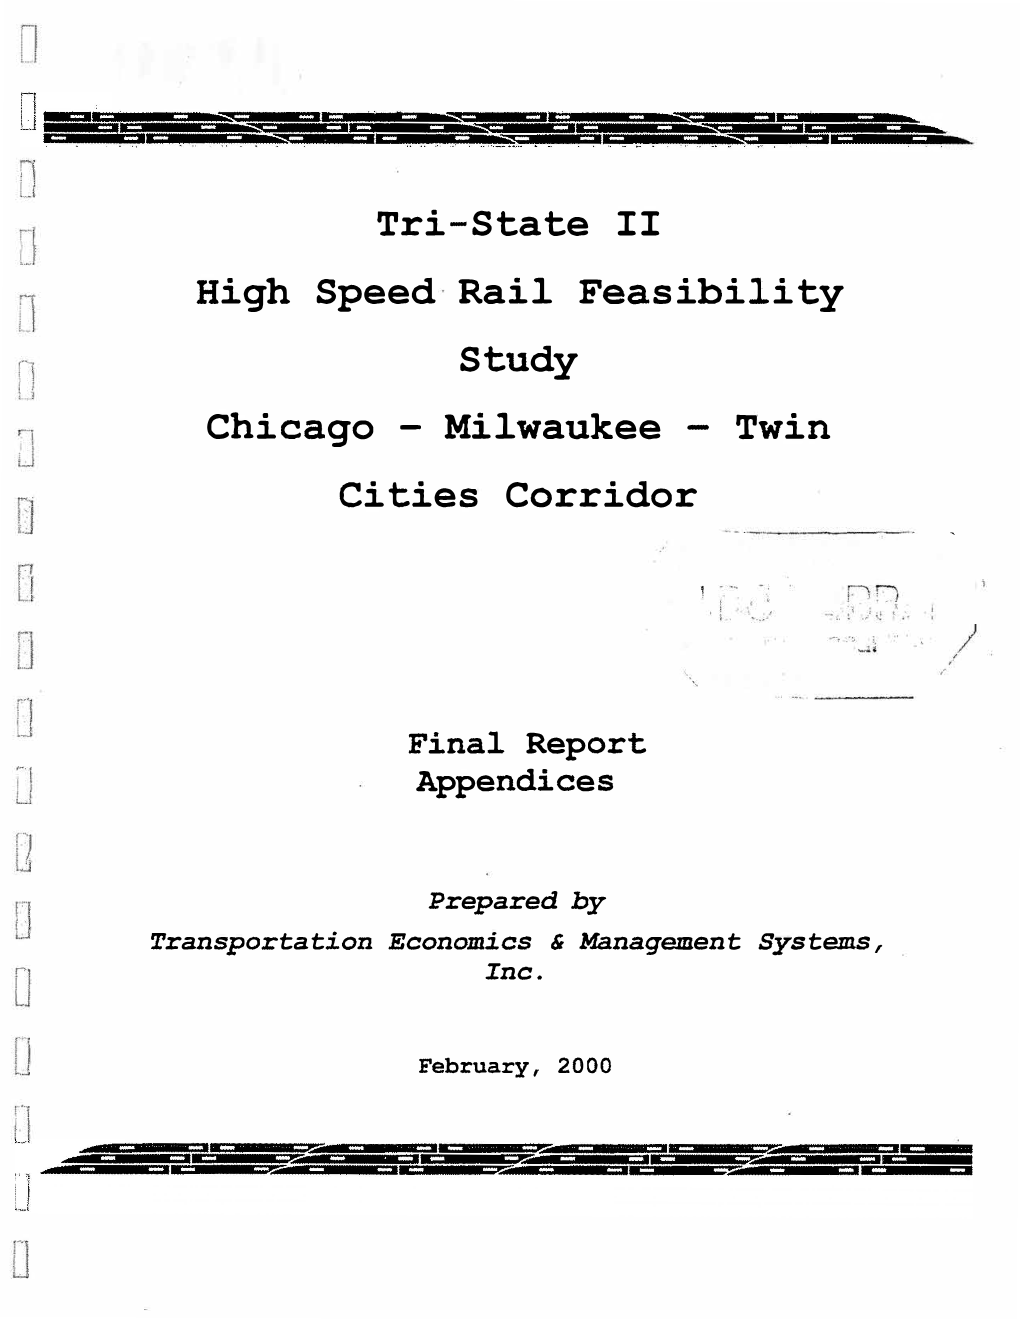 Tri-State II High Speed Rail Feasibility Study Chicago - Milwaukee - Twin